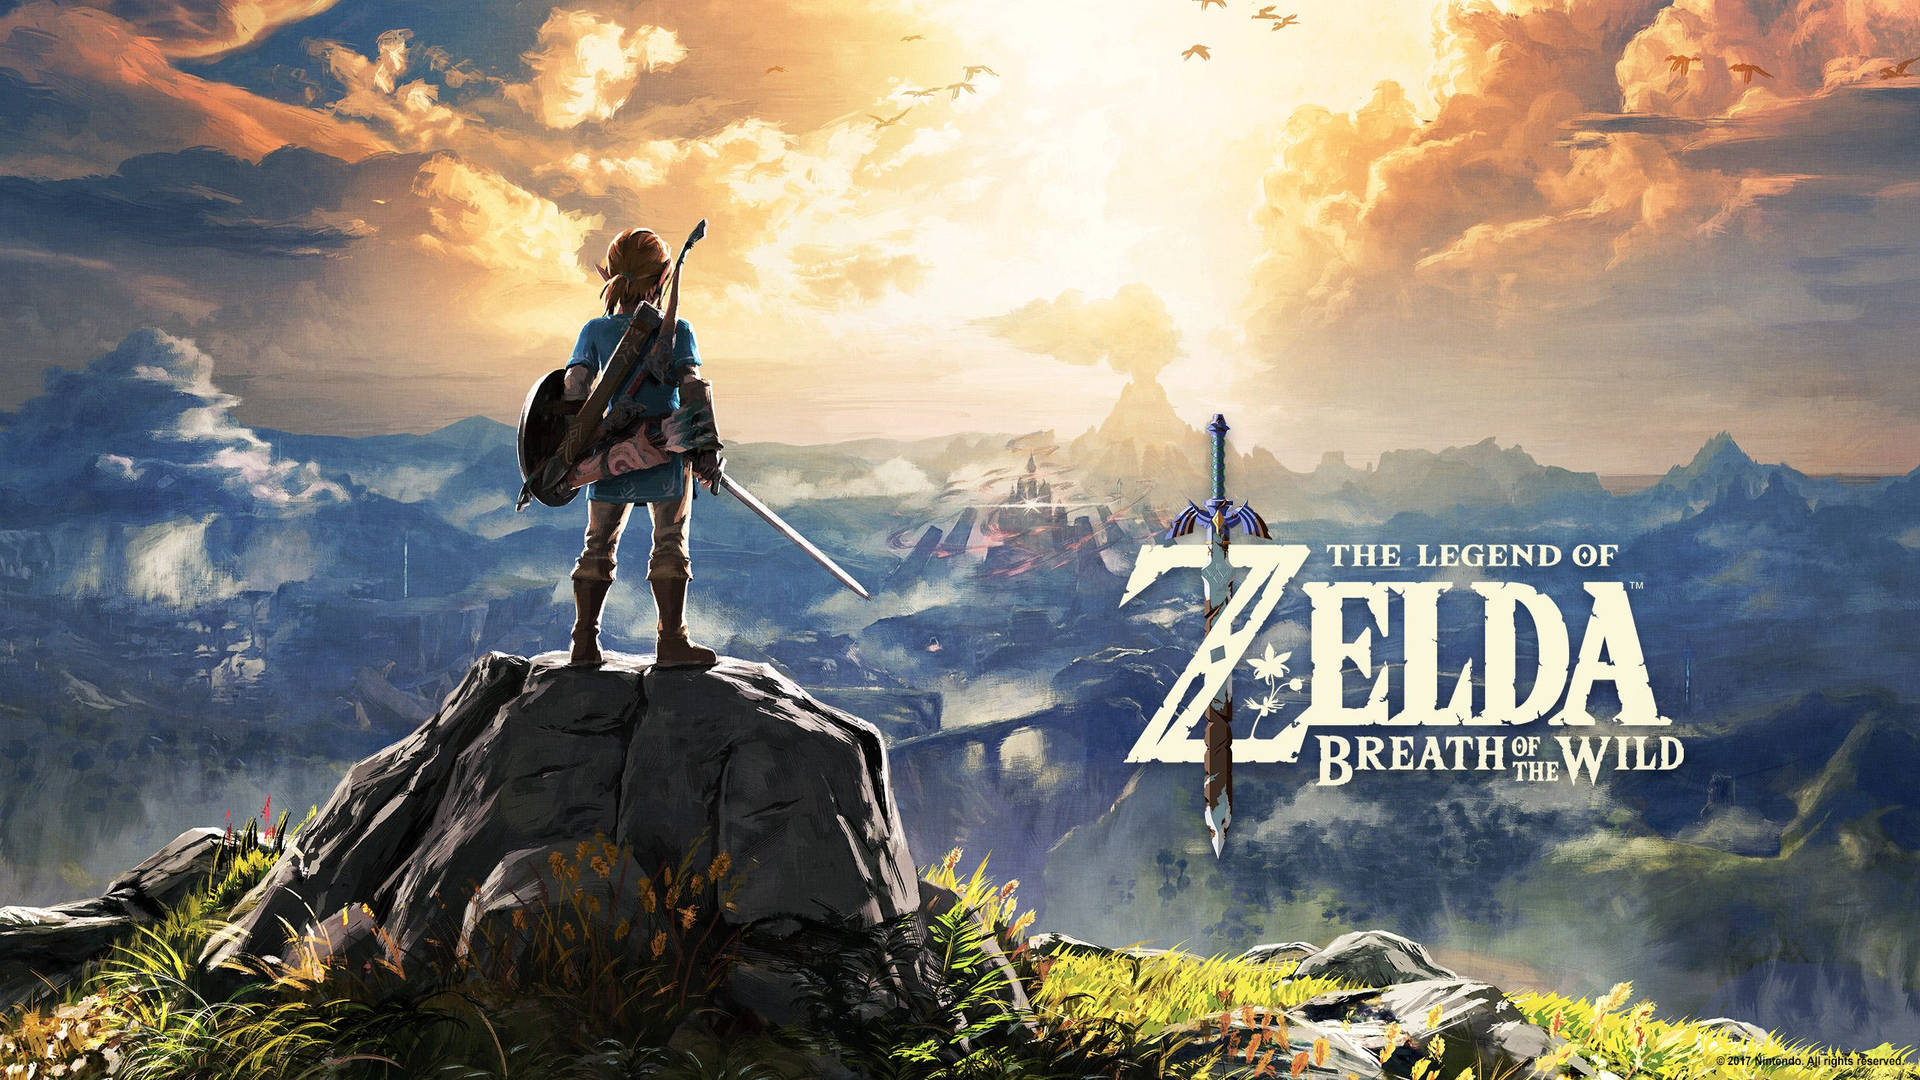 Breathe In The Adventure of The Legend Of Zelda: Breath Of The Wild Wallpaper